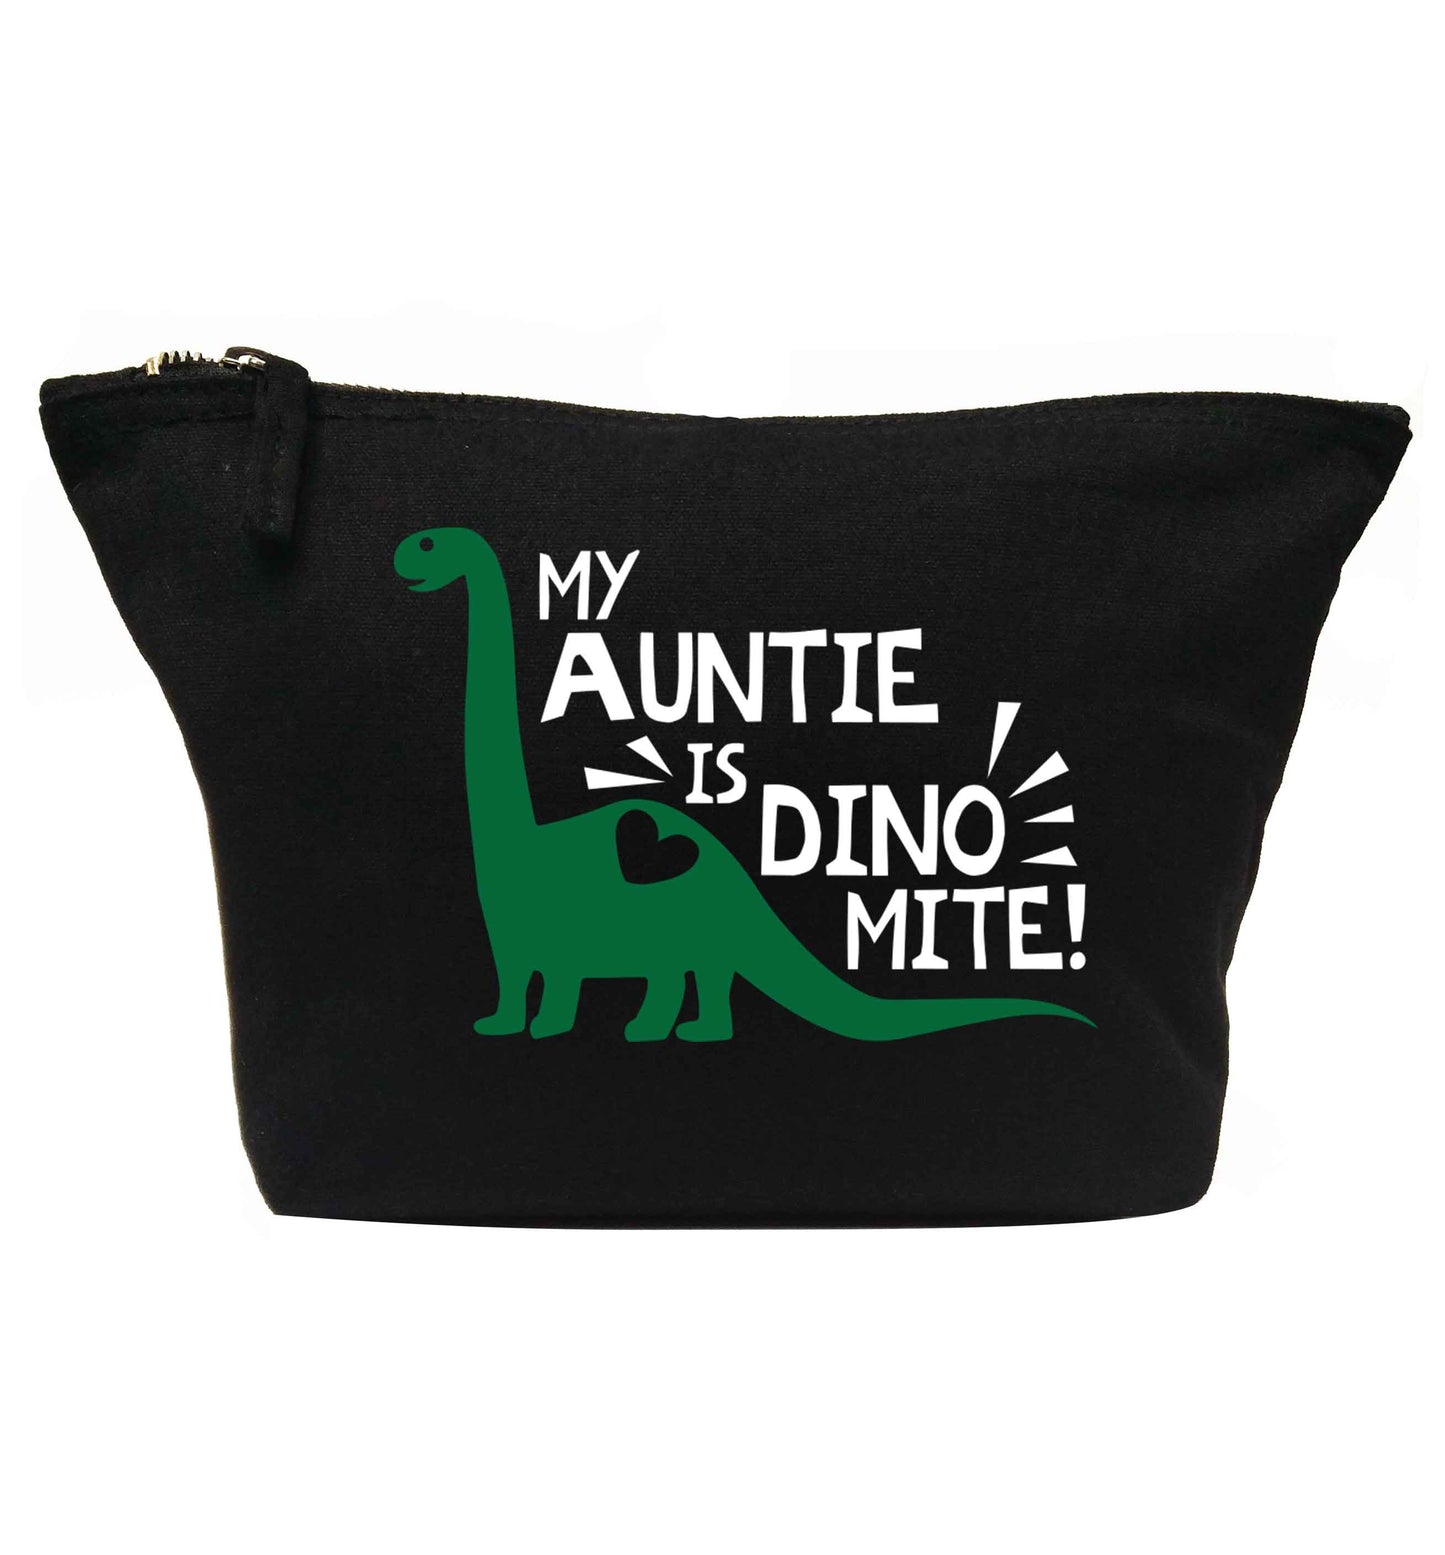 My auntie is dinomite! | makeup / wash bag